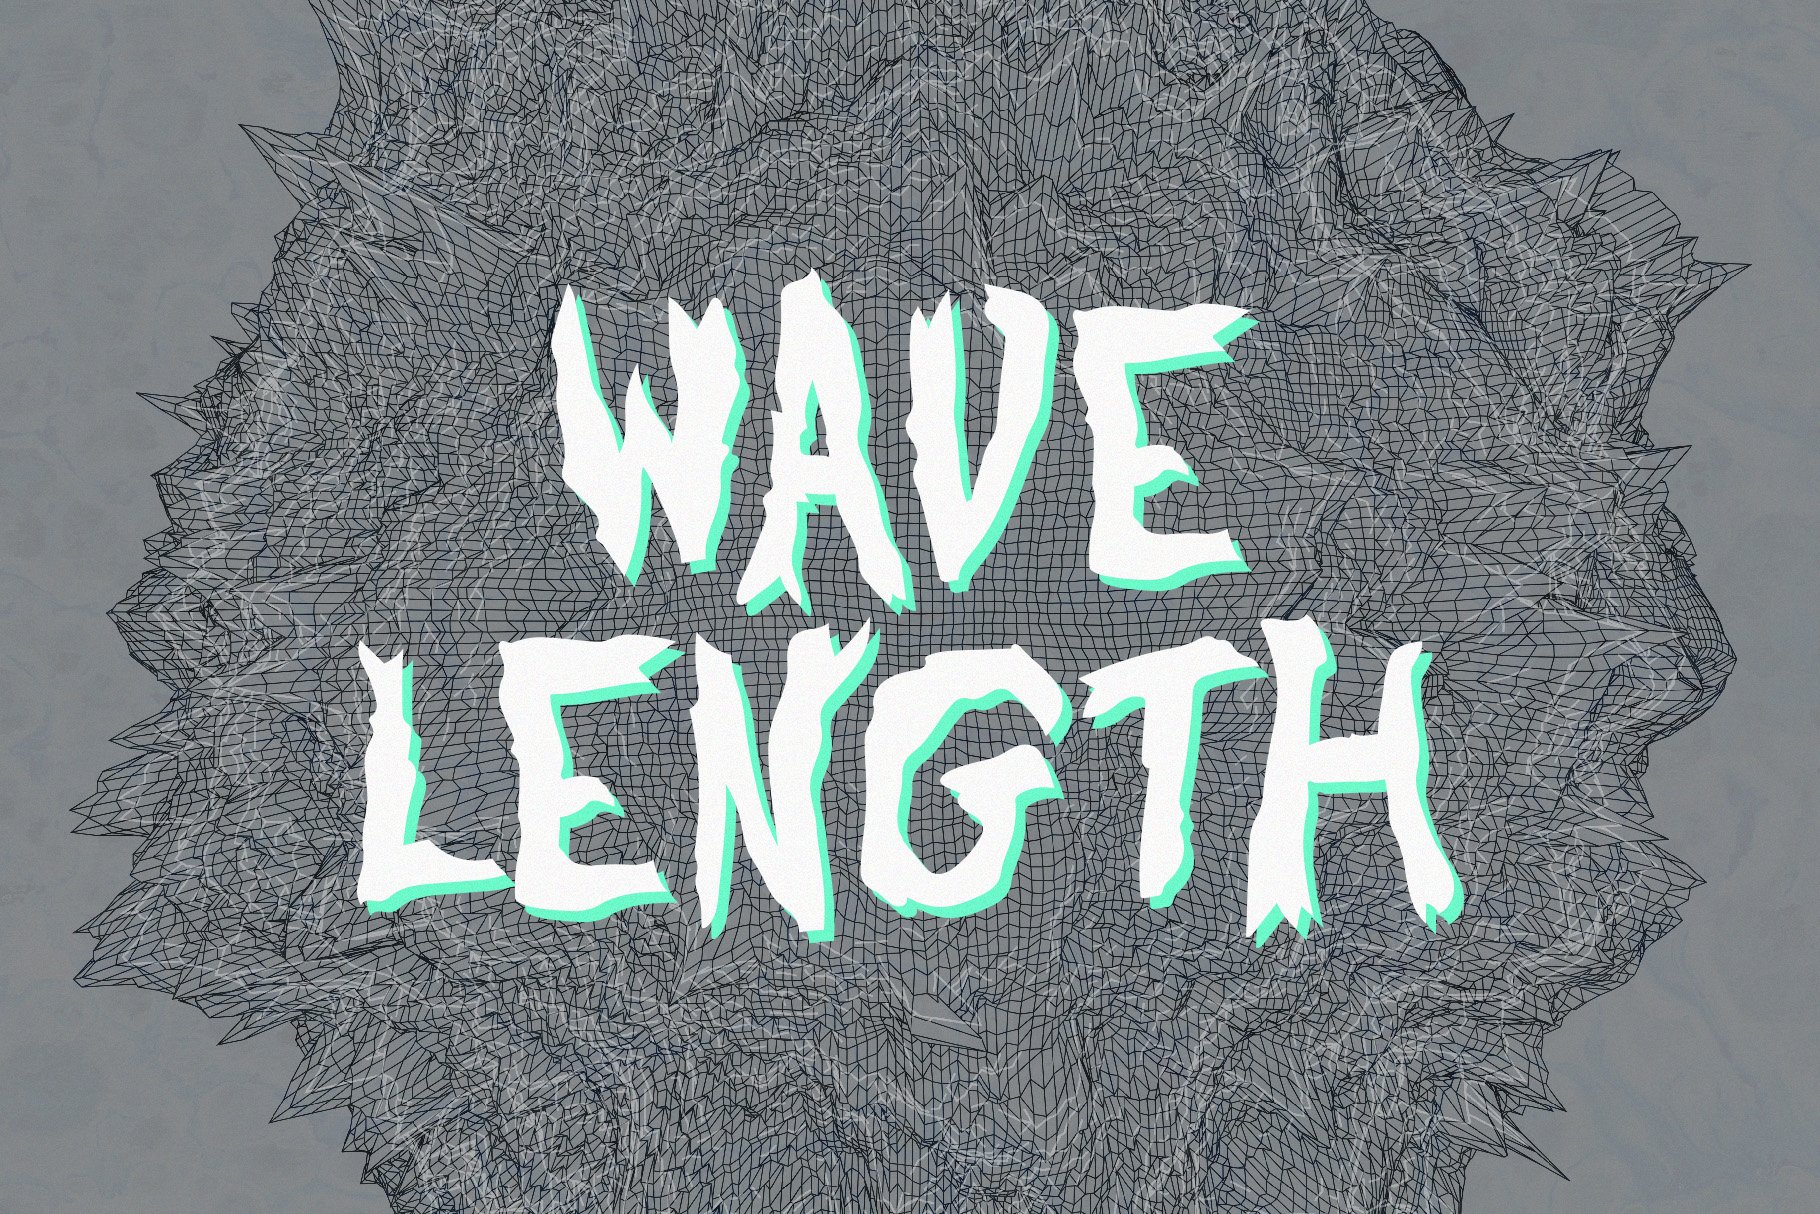 Wavelength Typeface cover image.